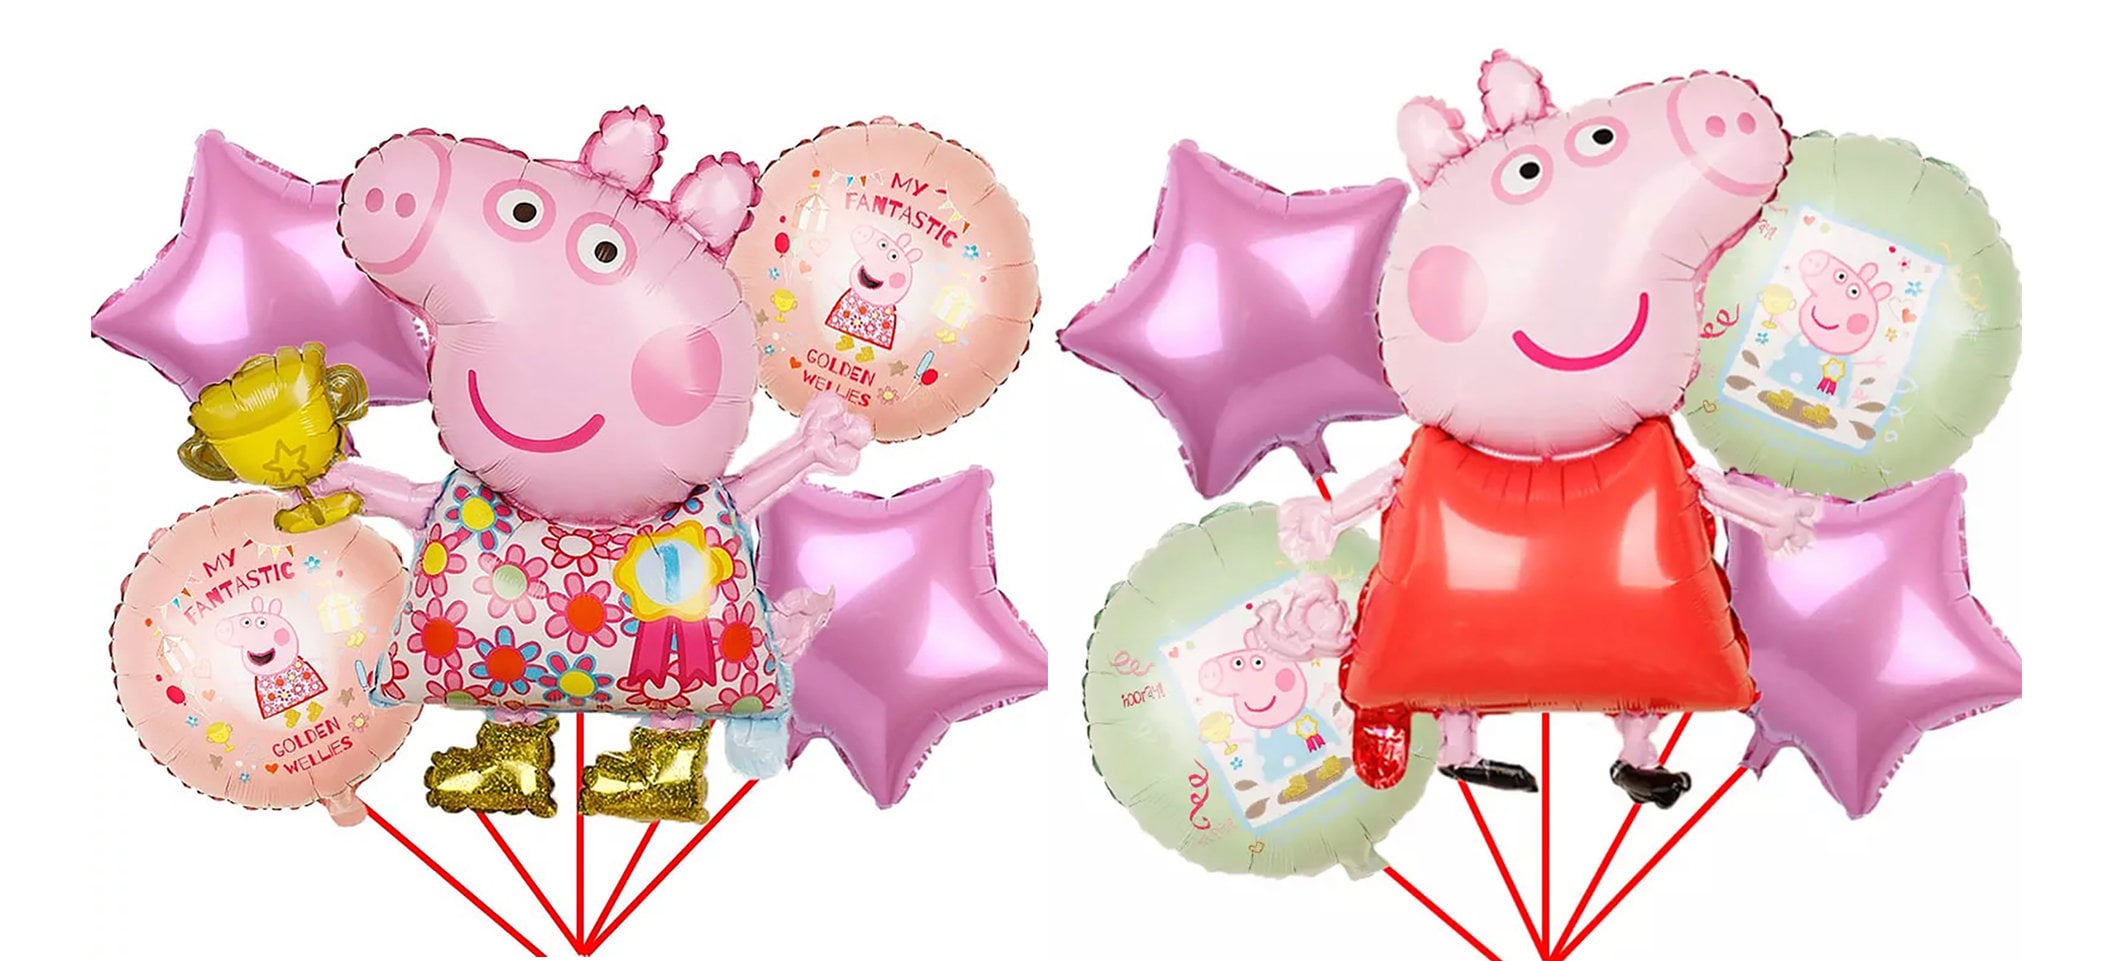 Decoración Con Globos Peppa Pig/ balloons decoration peppa pig 